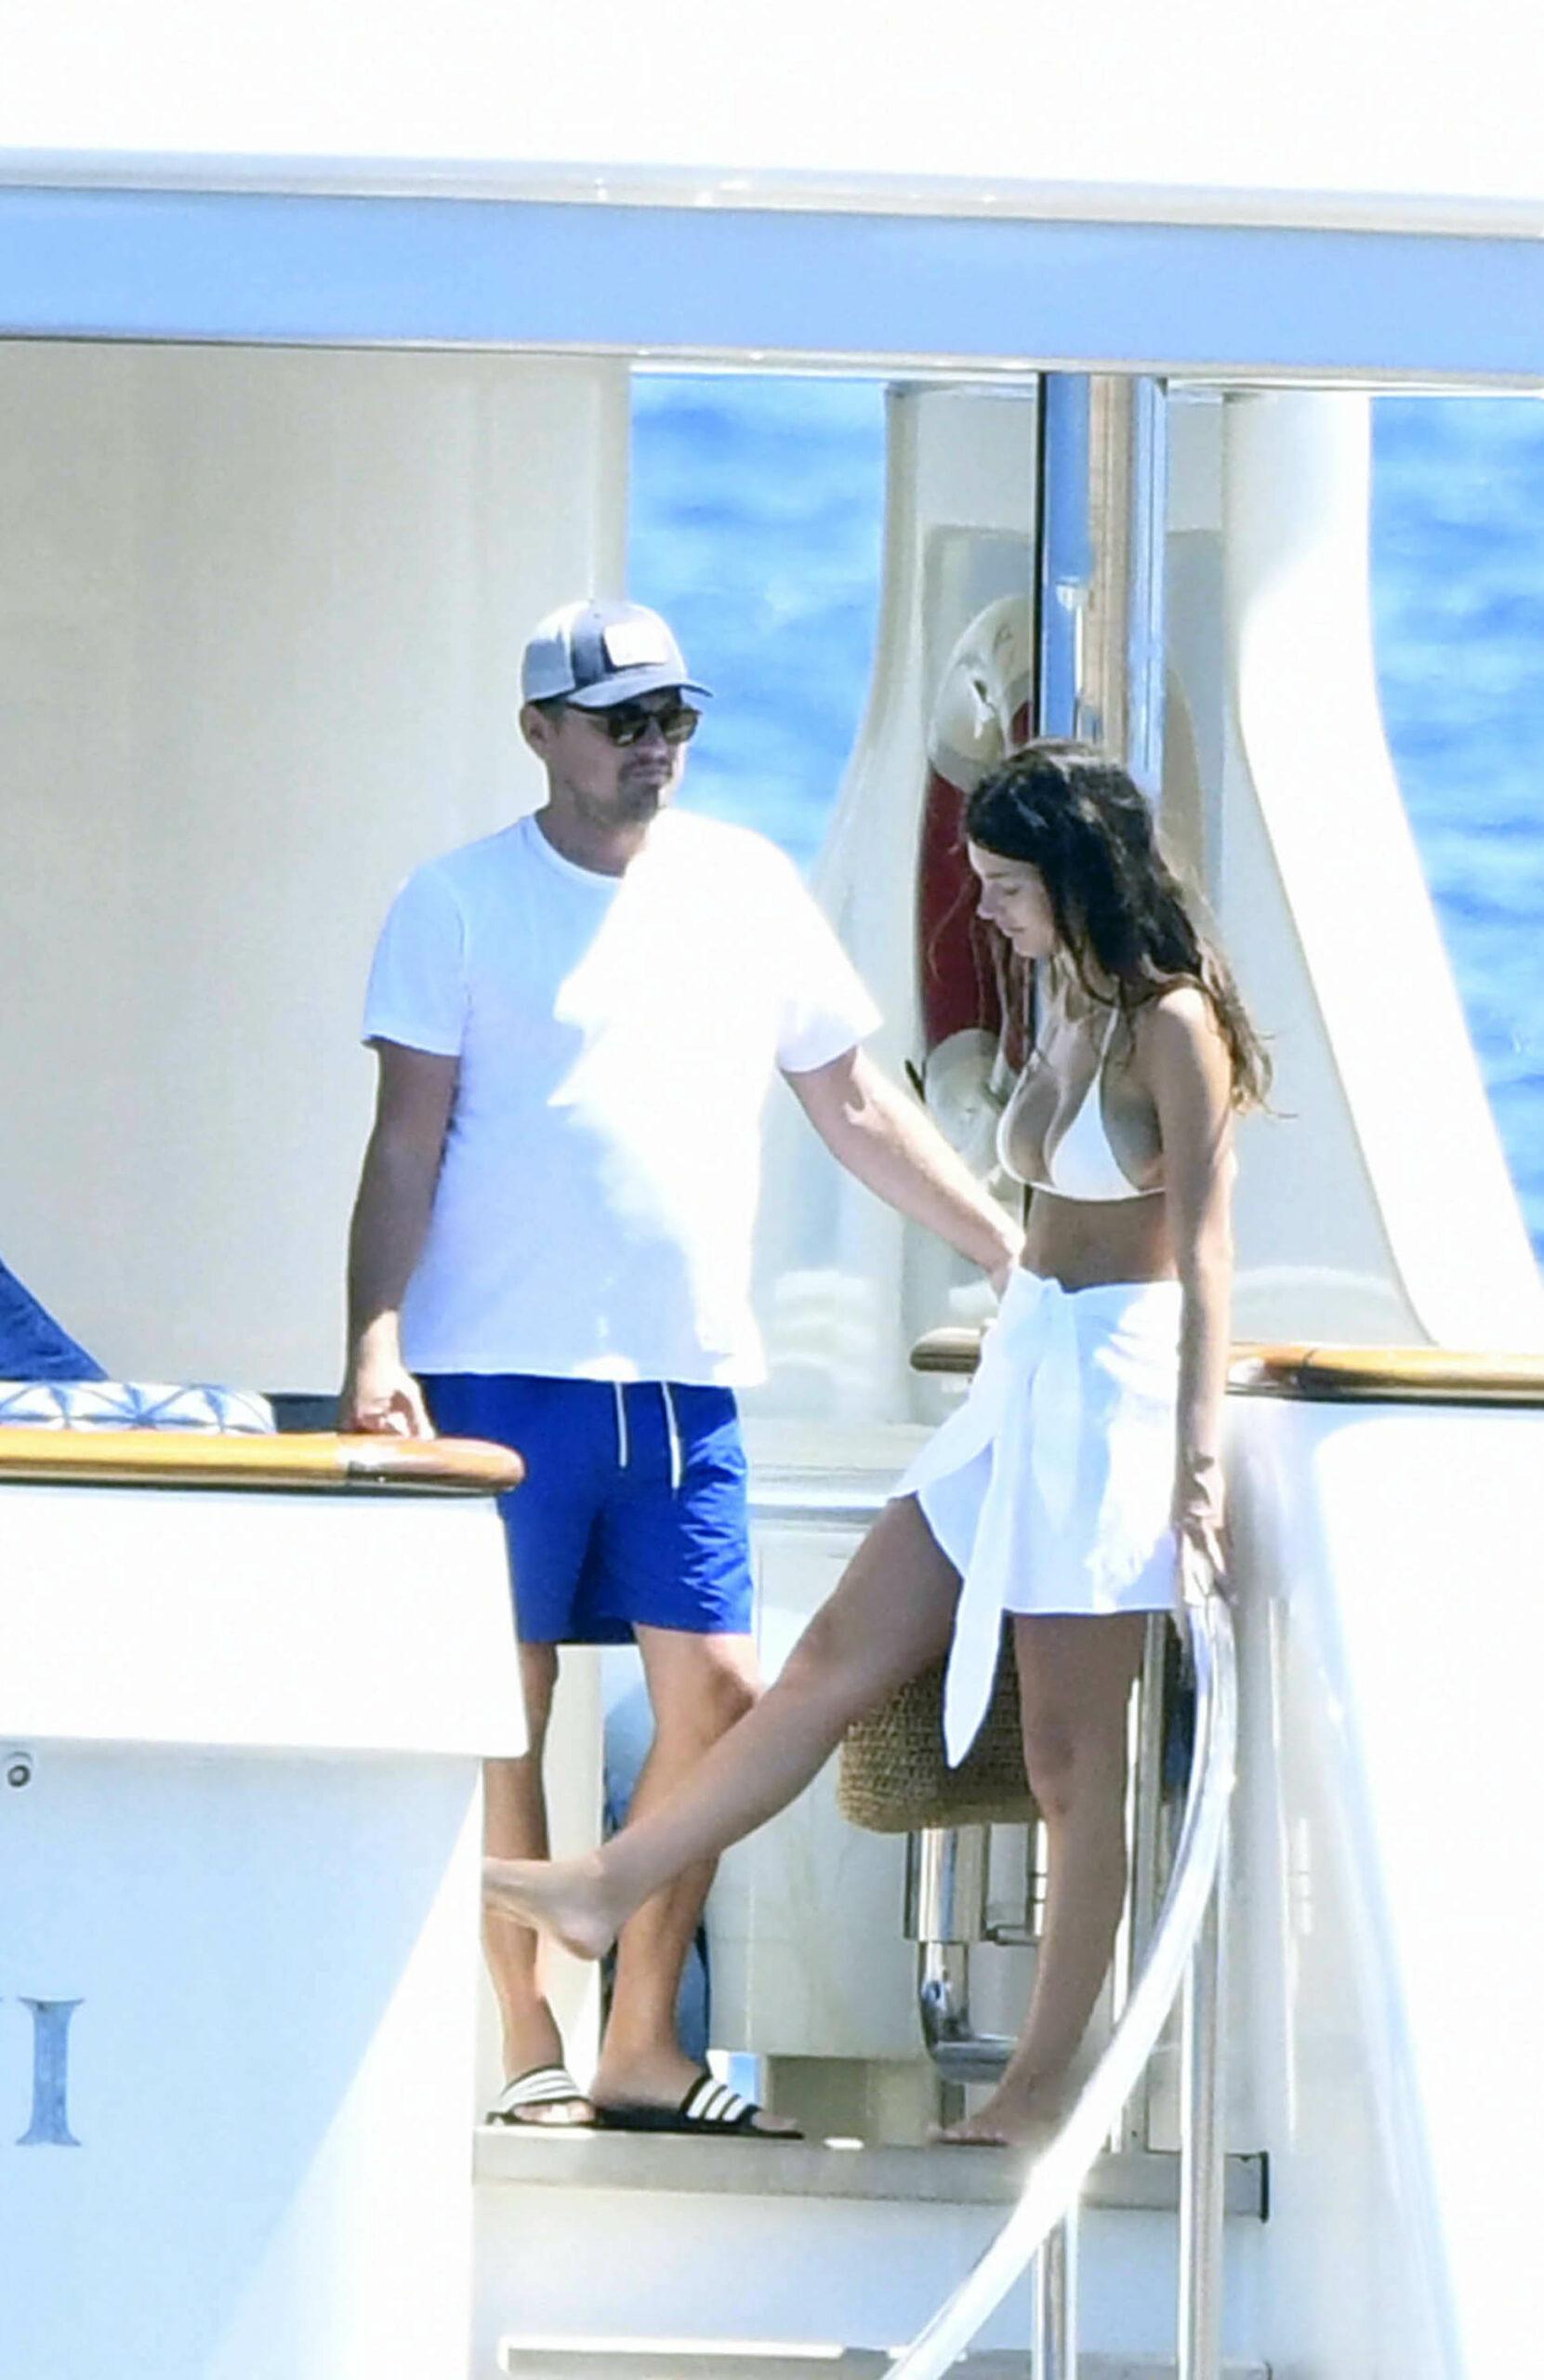 Dad Bod Alert: Leonardo DiCaprio Indulges In PDA With Camila Morrone